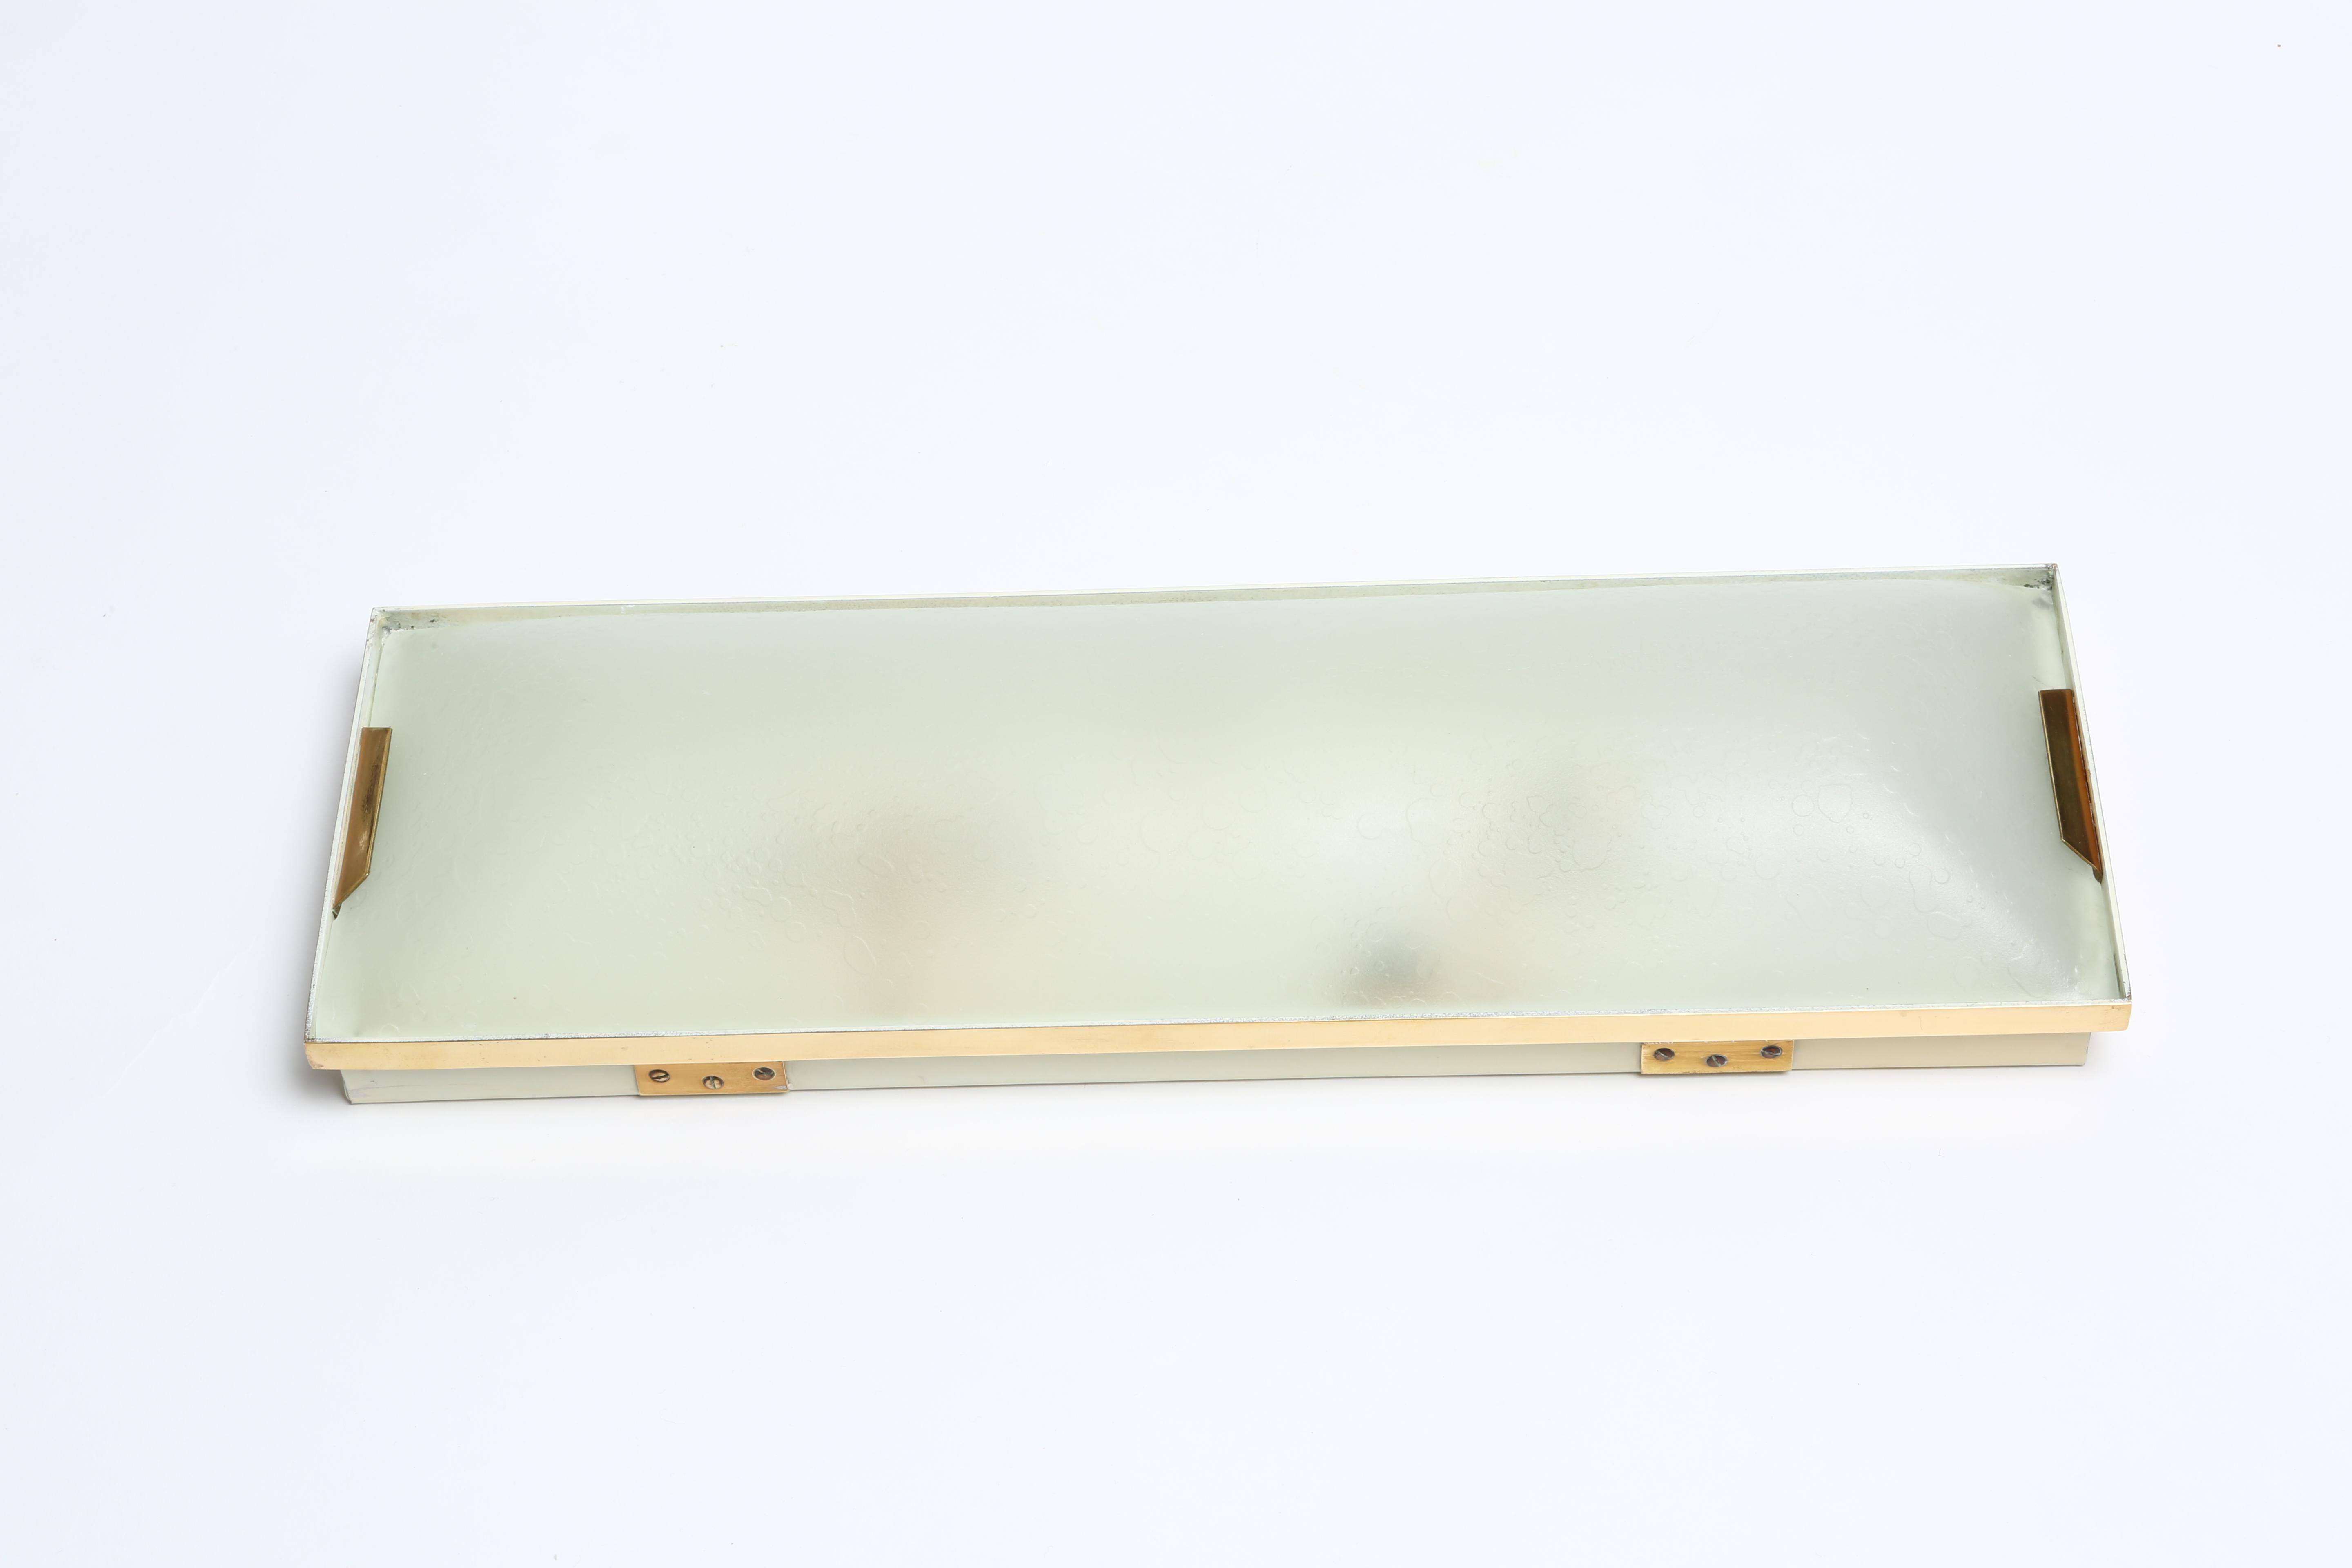 Stilnovo rectangular flush mount.
Italy 1960s.
Textured glass, brass, metal.
